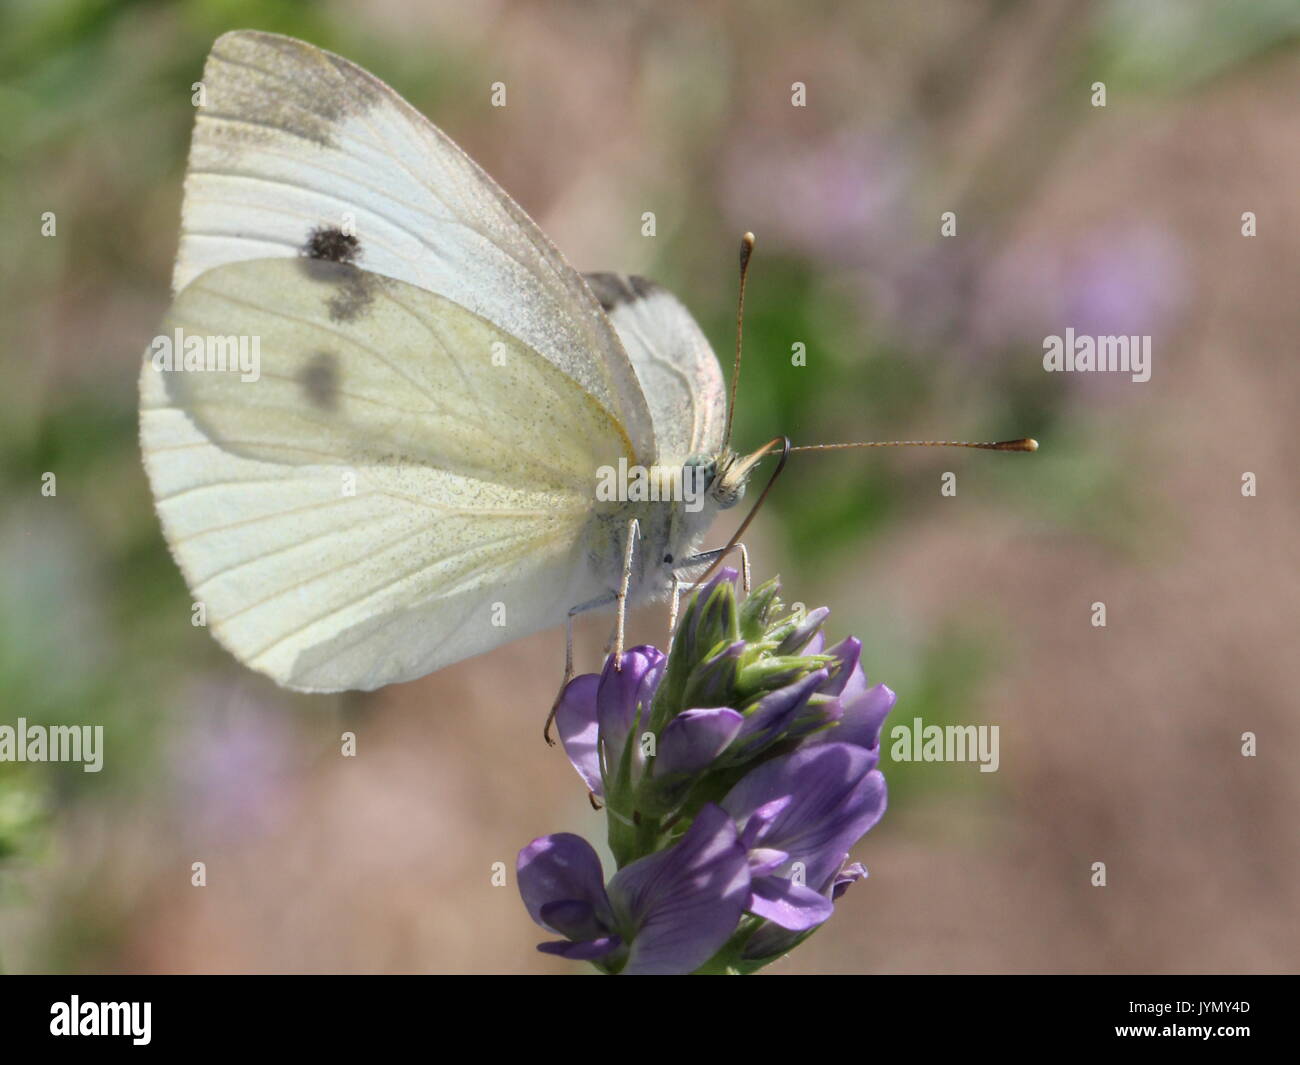 White butterfly on purple flower Stock Photo